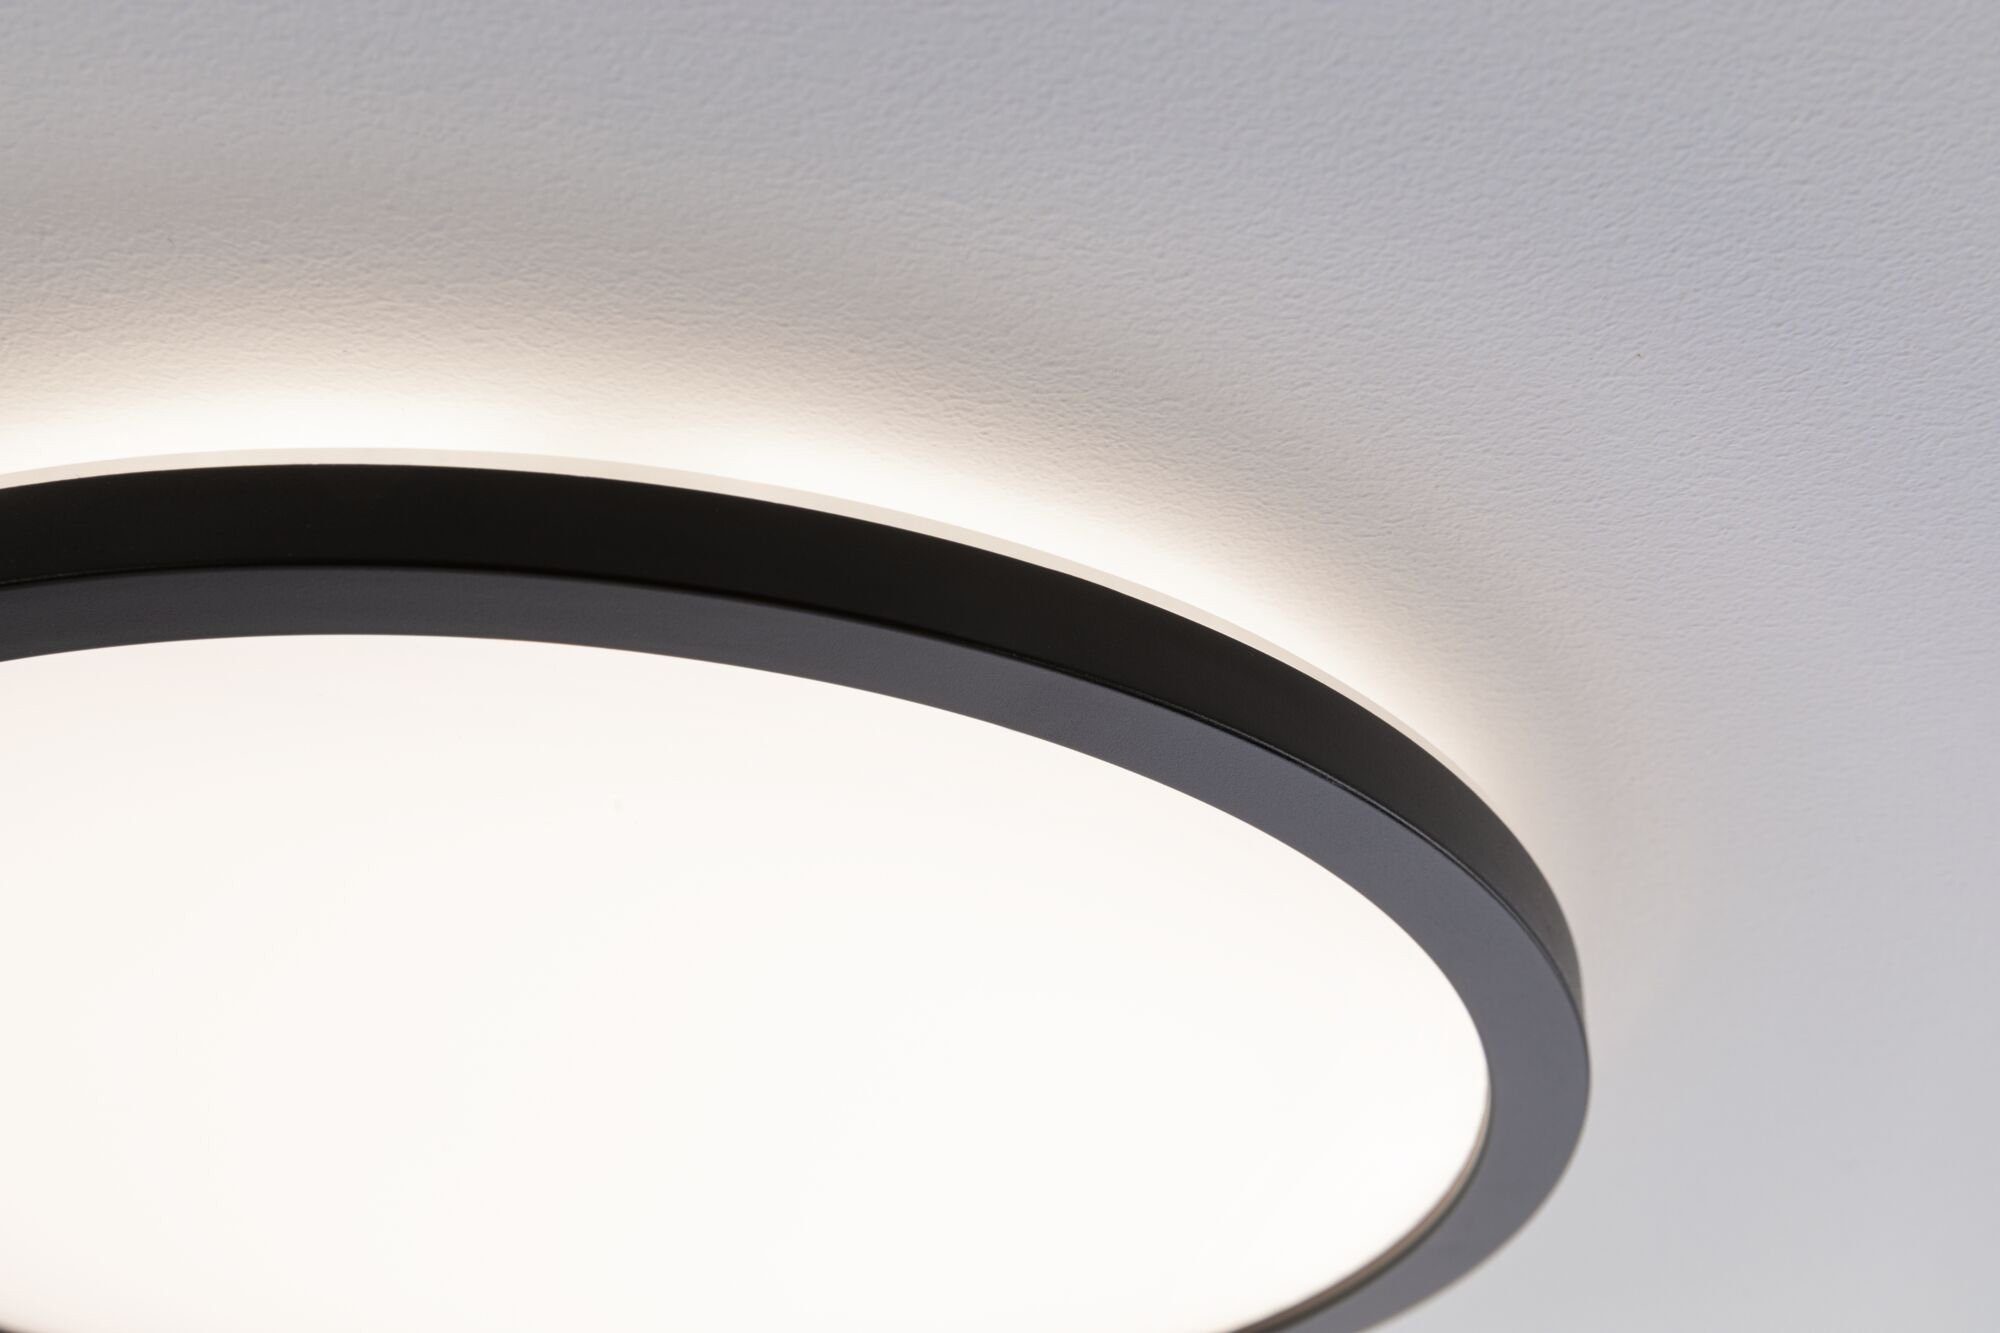 Paulmann LED Panel Atria Shine, fest Warmweiß integriert, LED